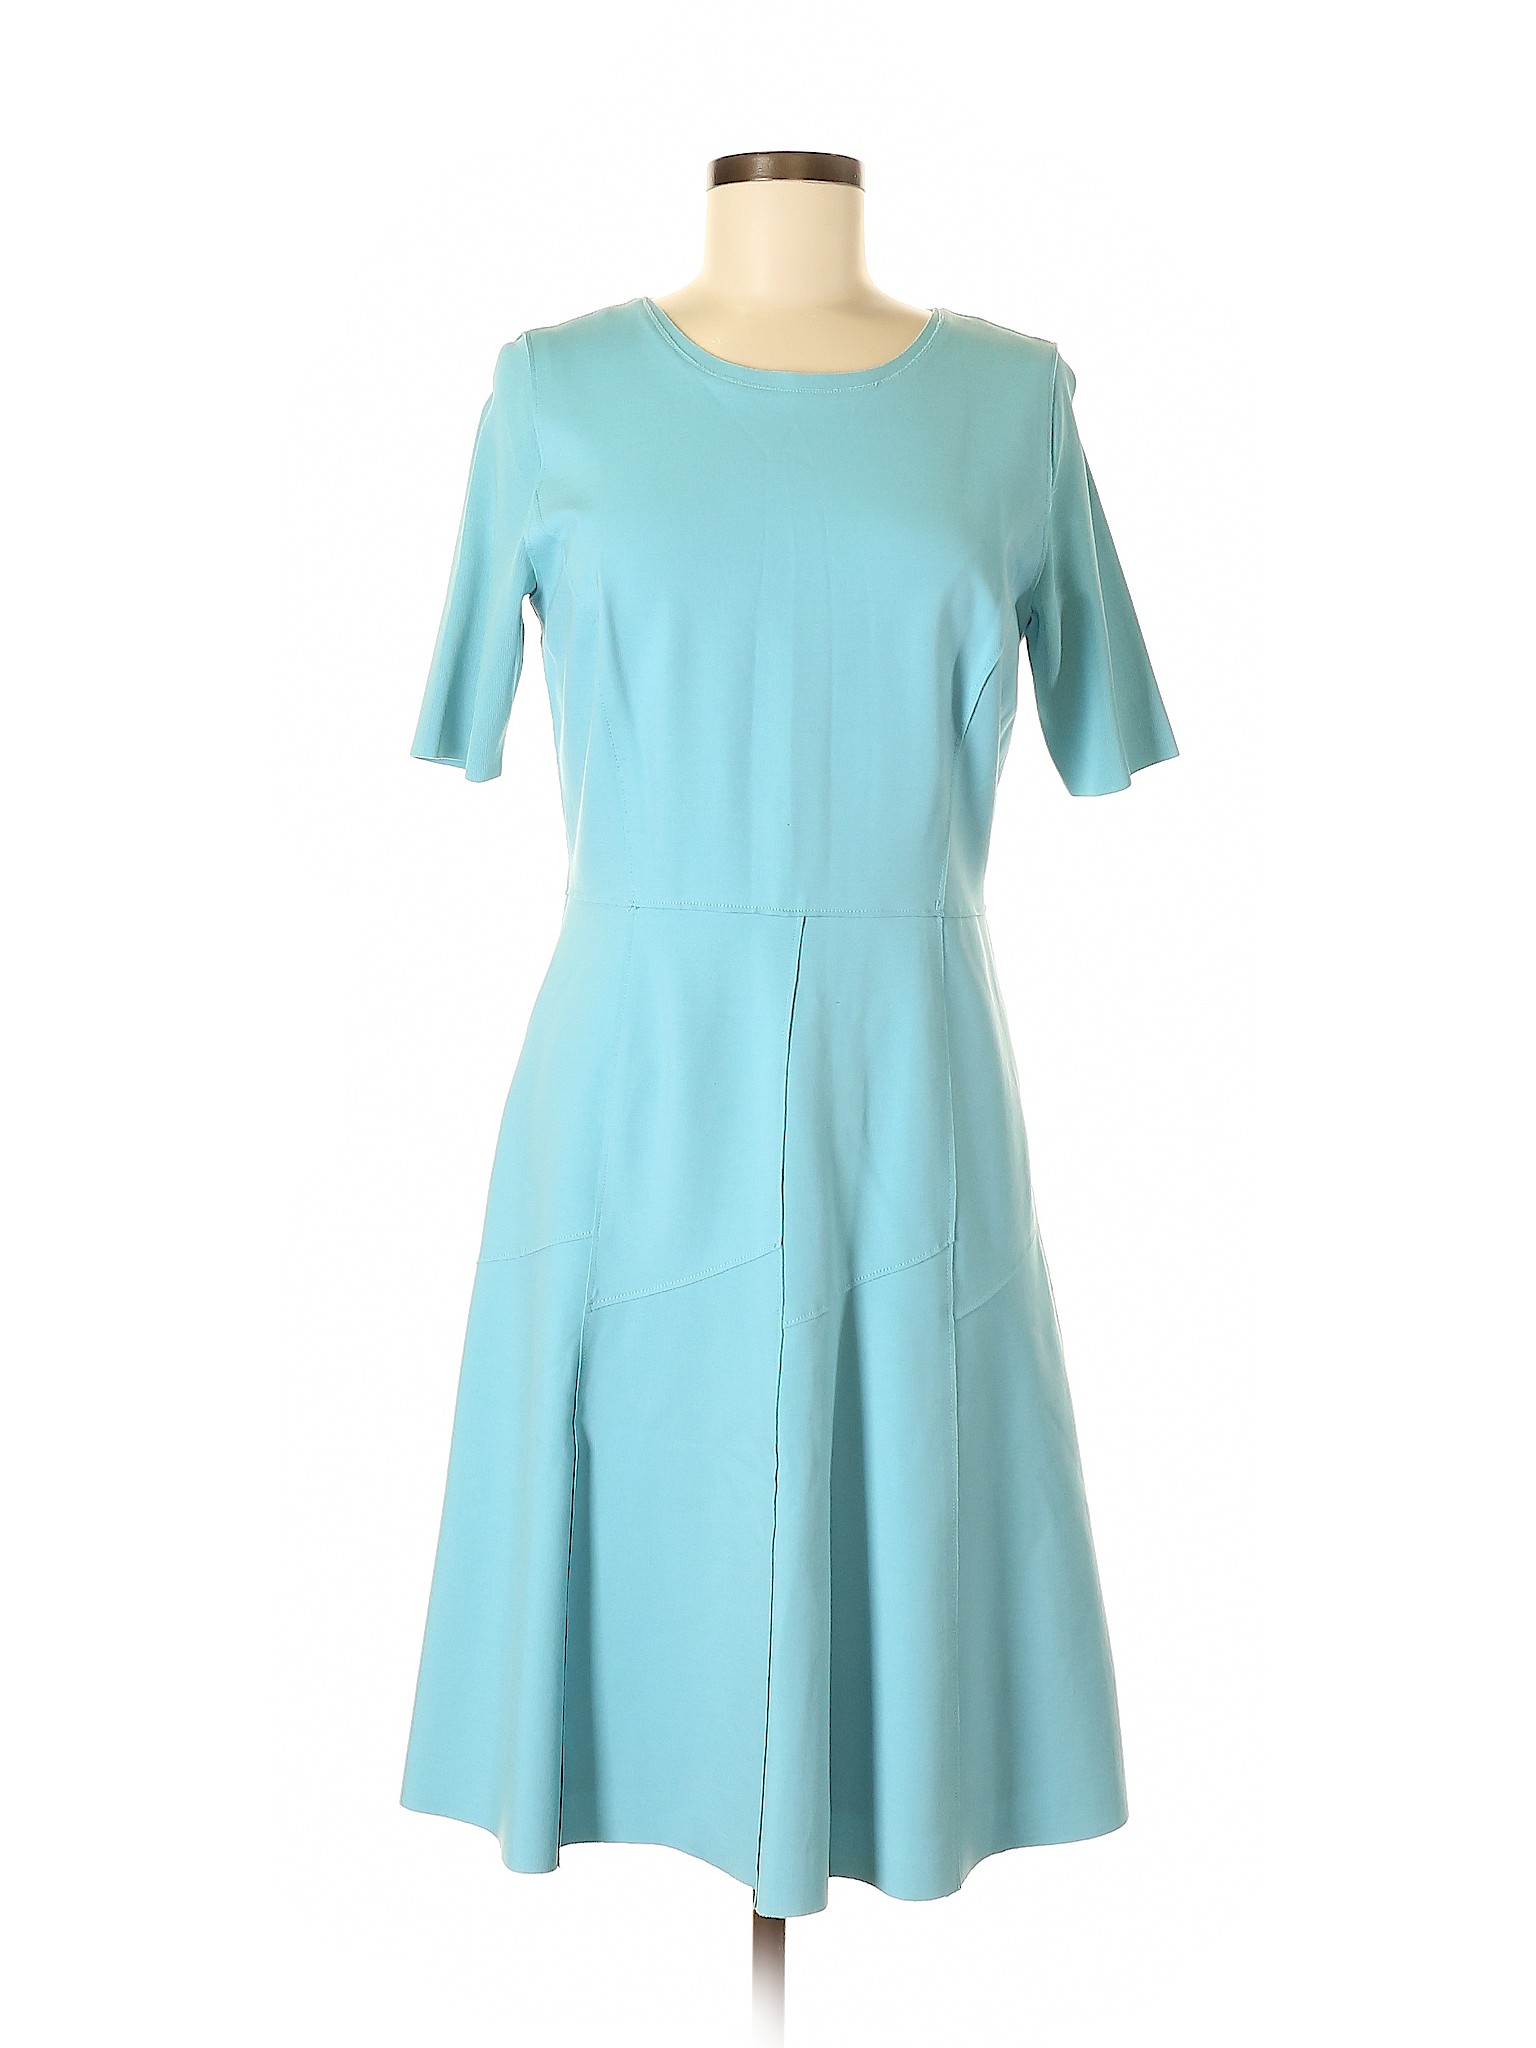 Elie Tahari Solid Blue Casual Dress Size 8 - 85% off | thredUP